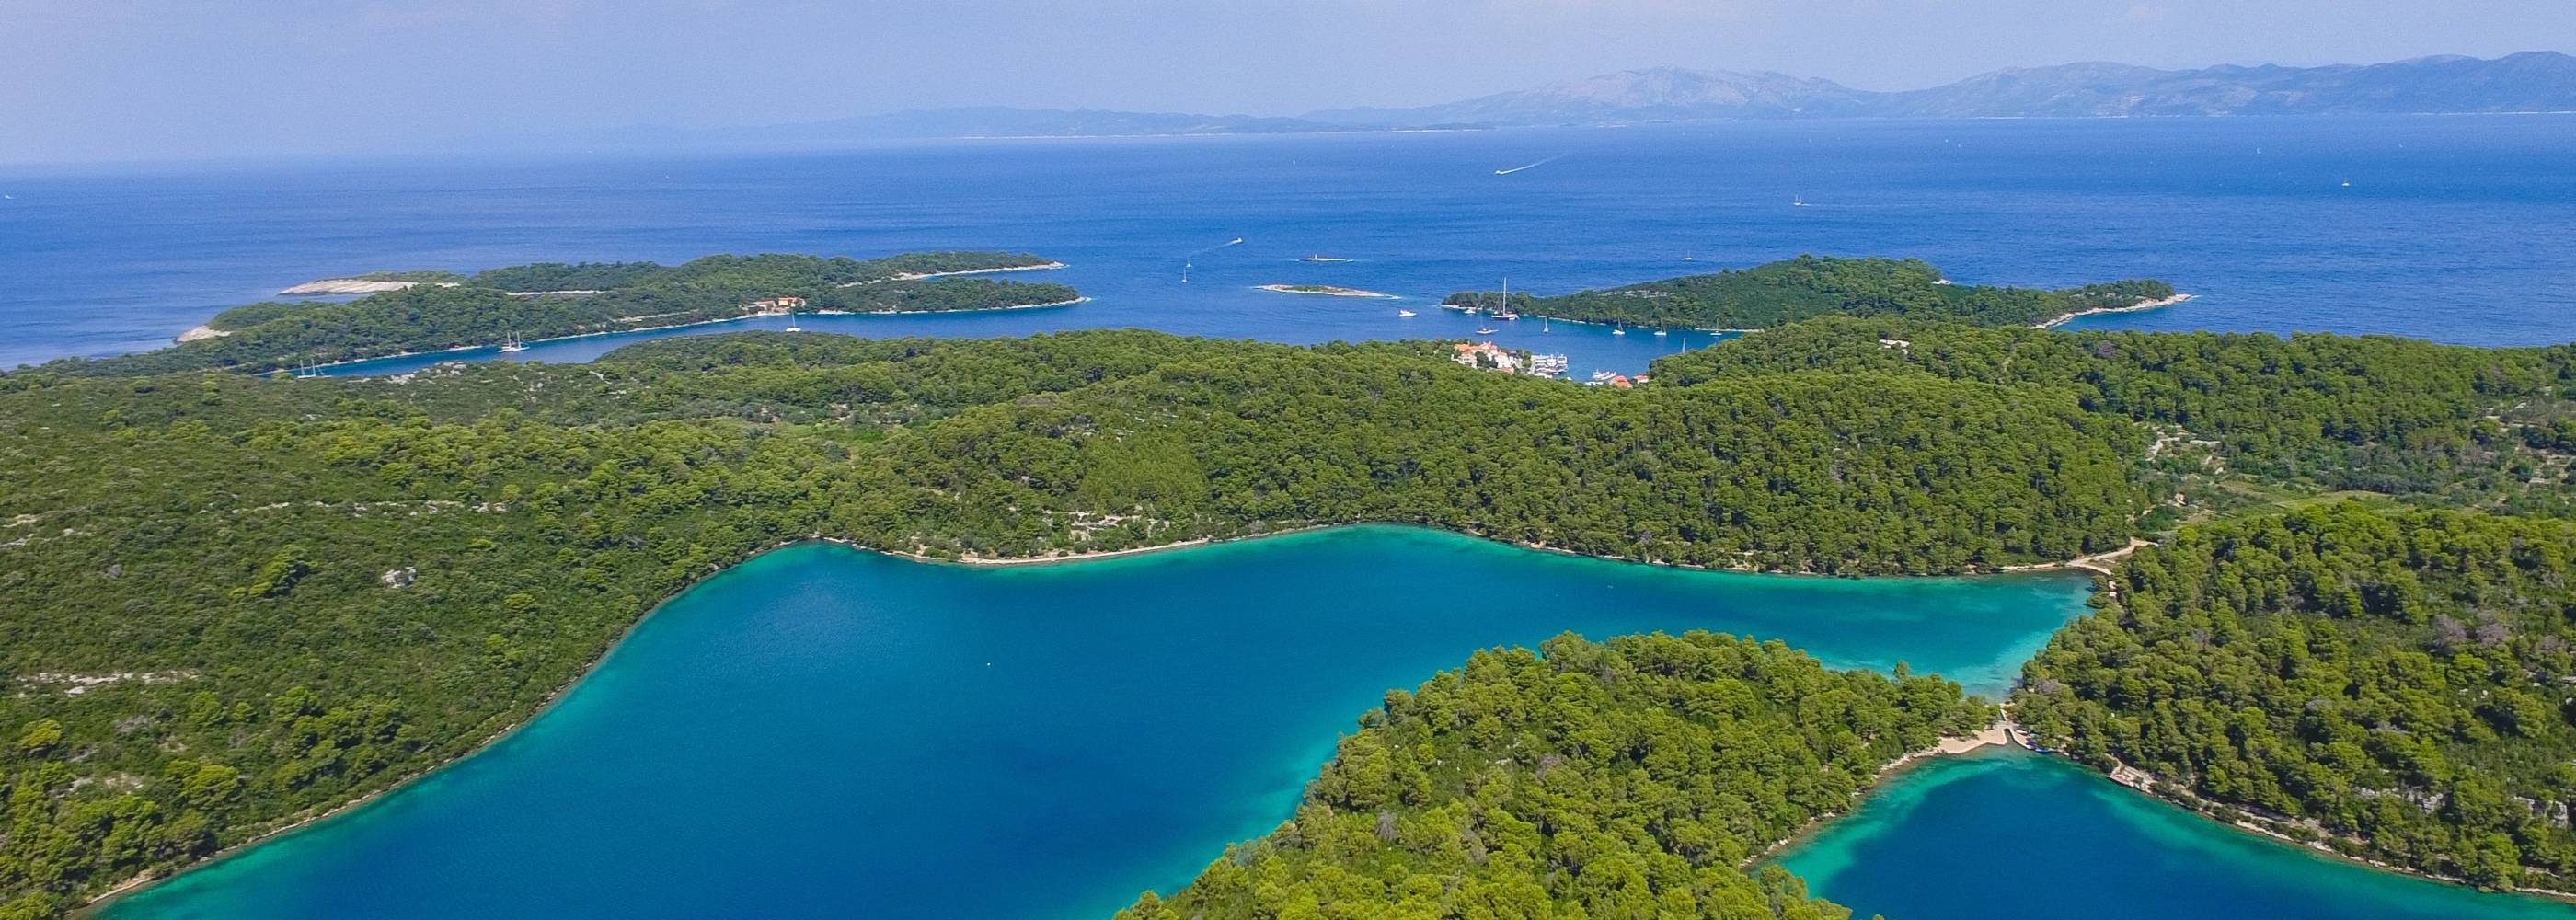 Dalmatian Islands, Split